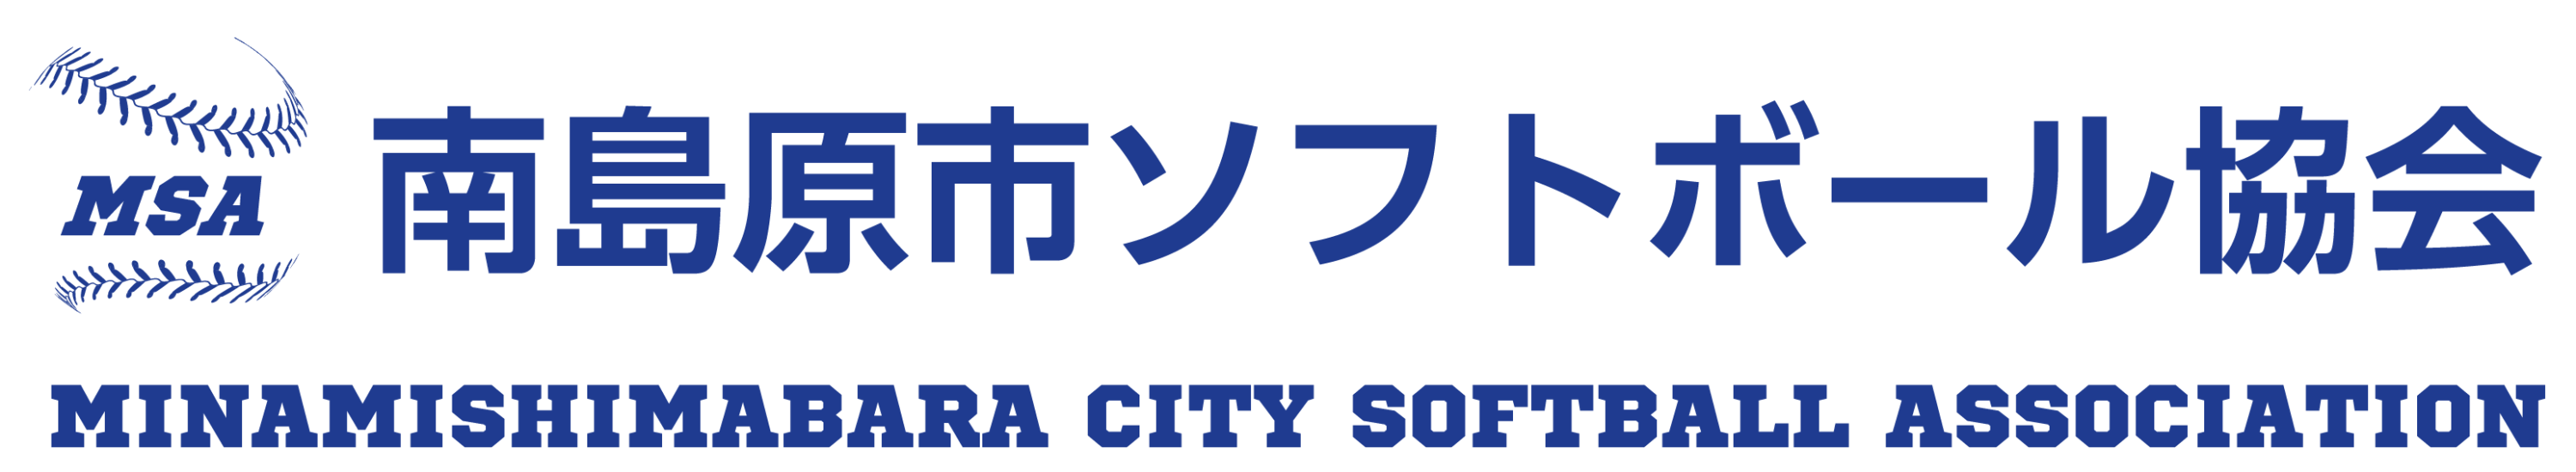 Minamishimabara city Softball Association